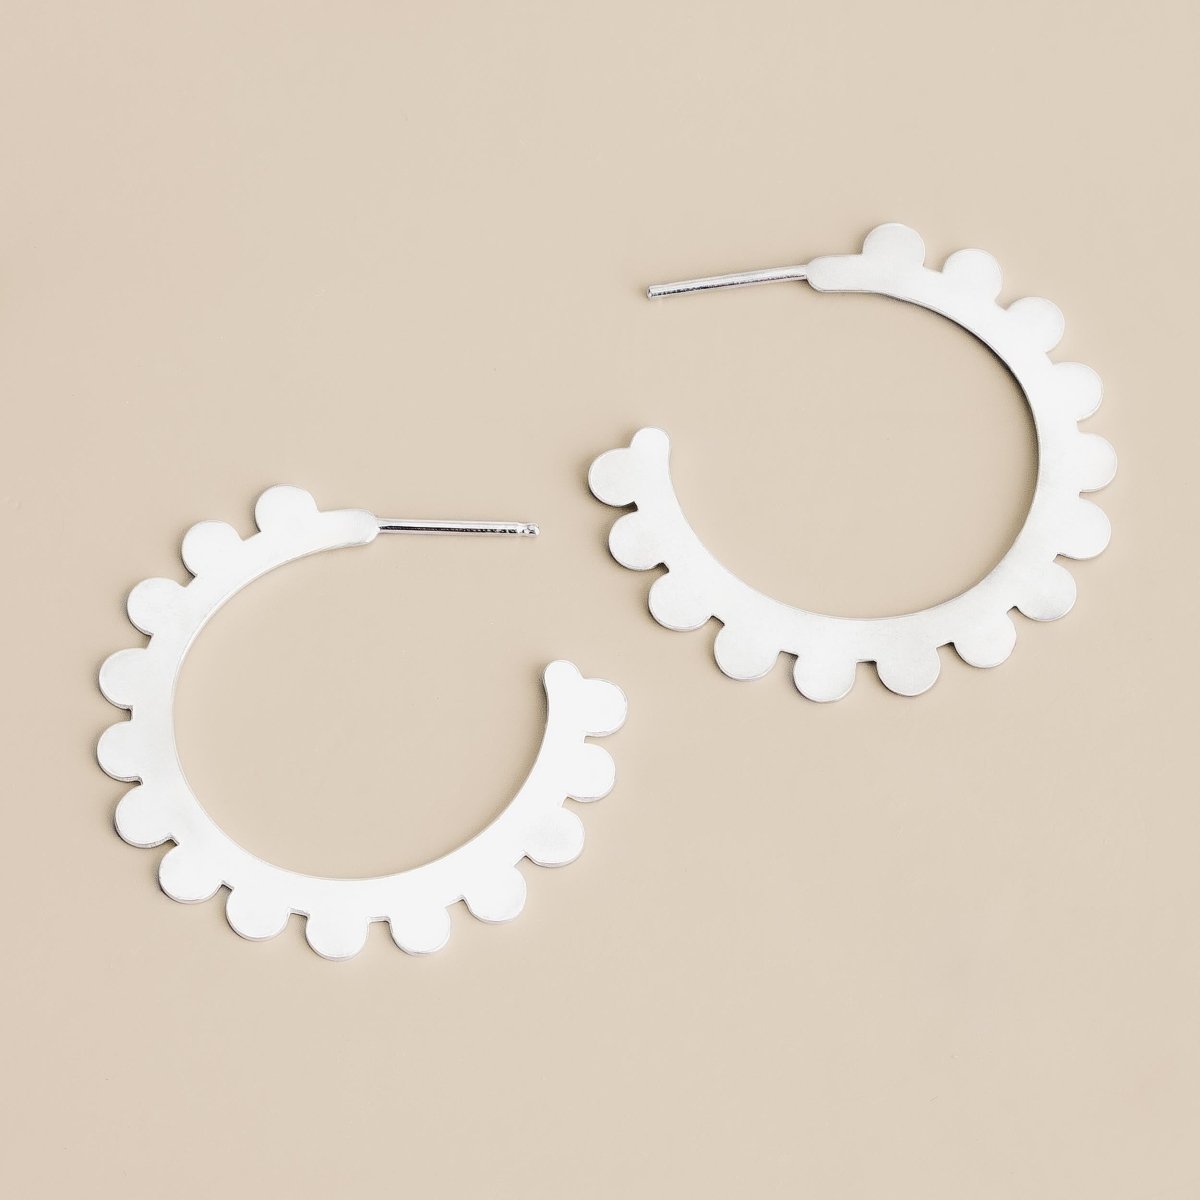 Large Poppy Hoop Earrings - Melanie Golden Jewelry - _badge_NEW, earrings, hoop earrings, hoops, new